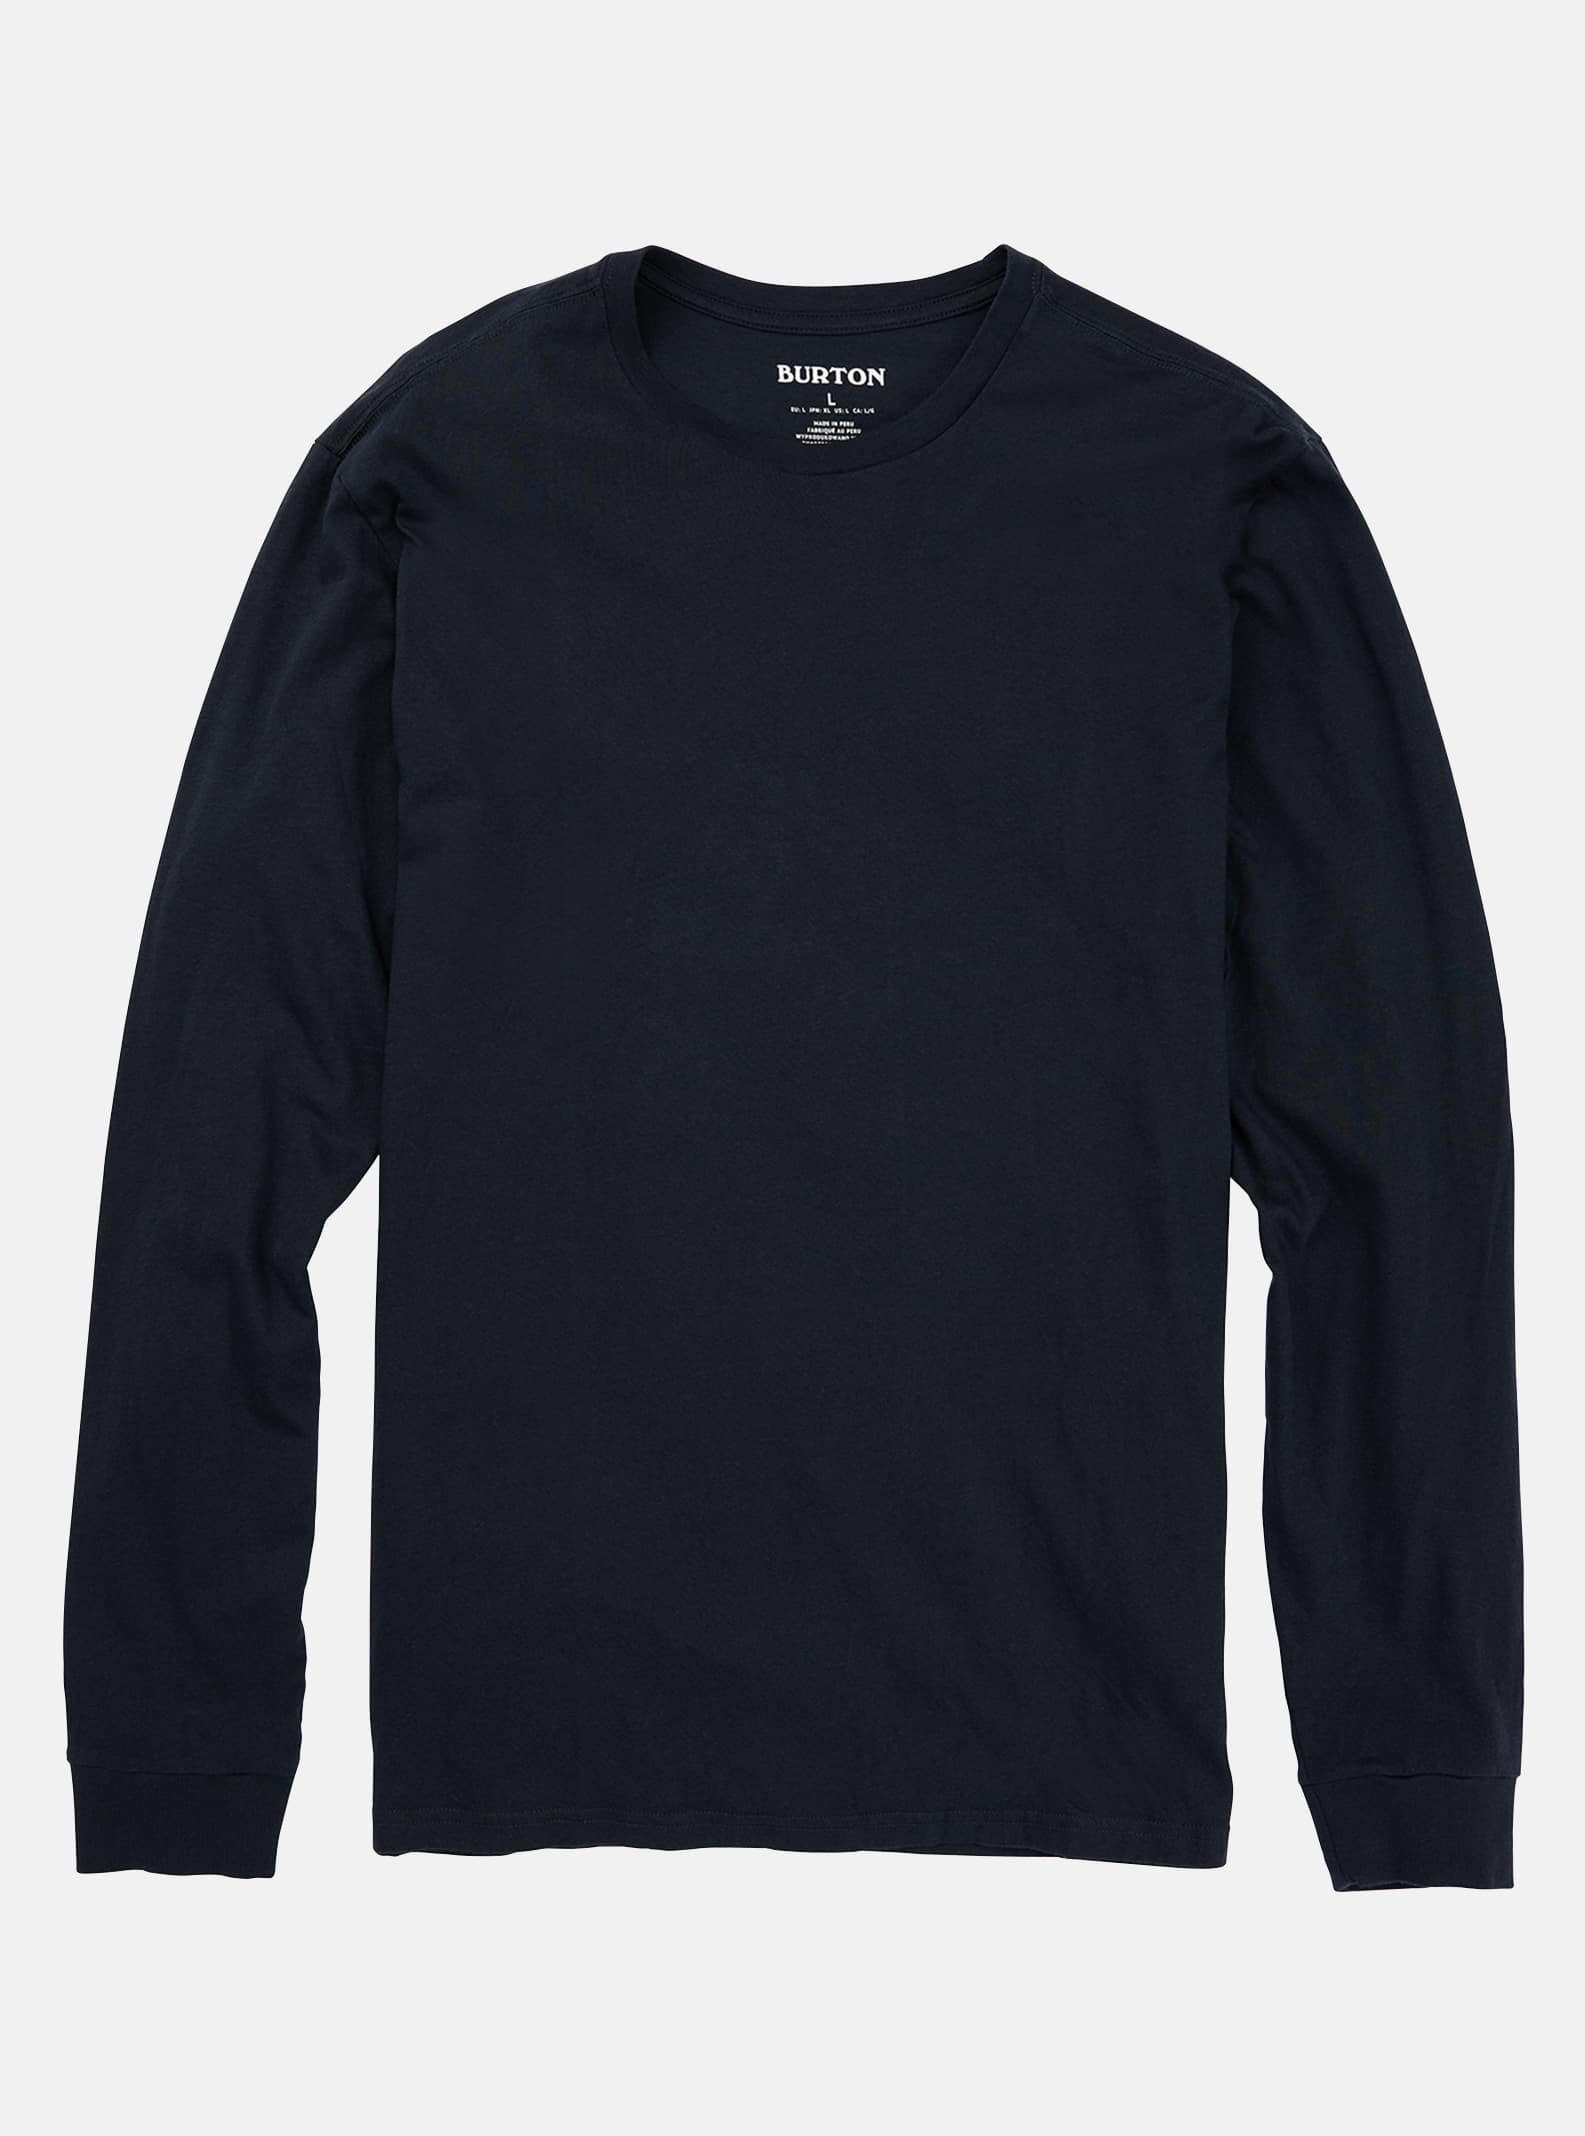 Burton T-shirt - Classic Long Sleeve, True Black, XL